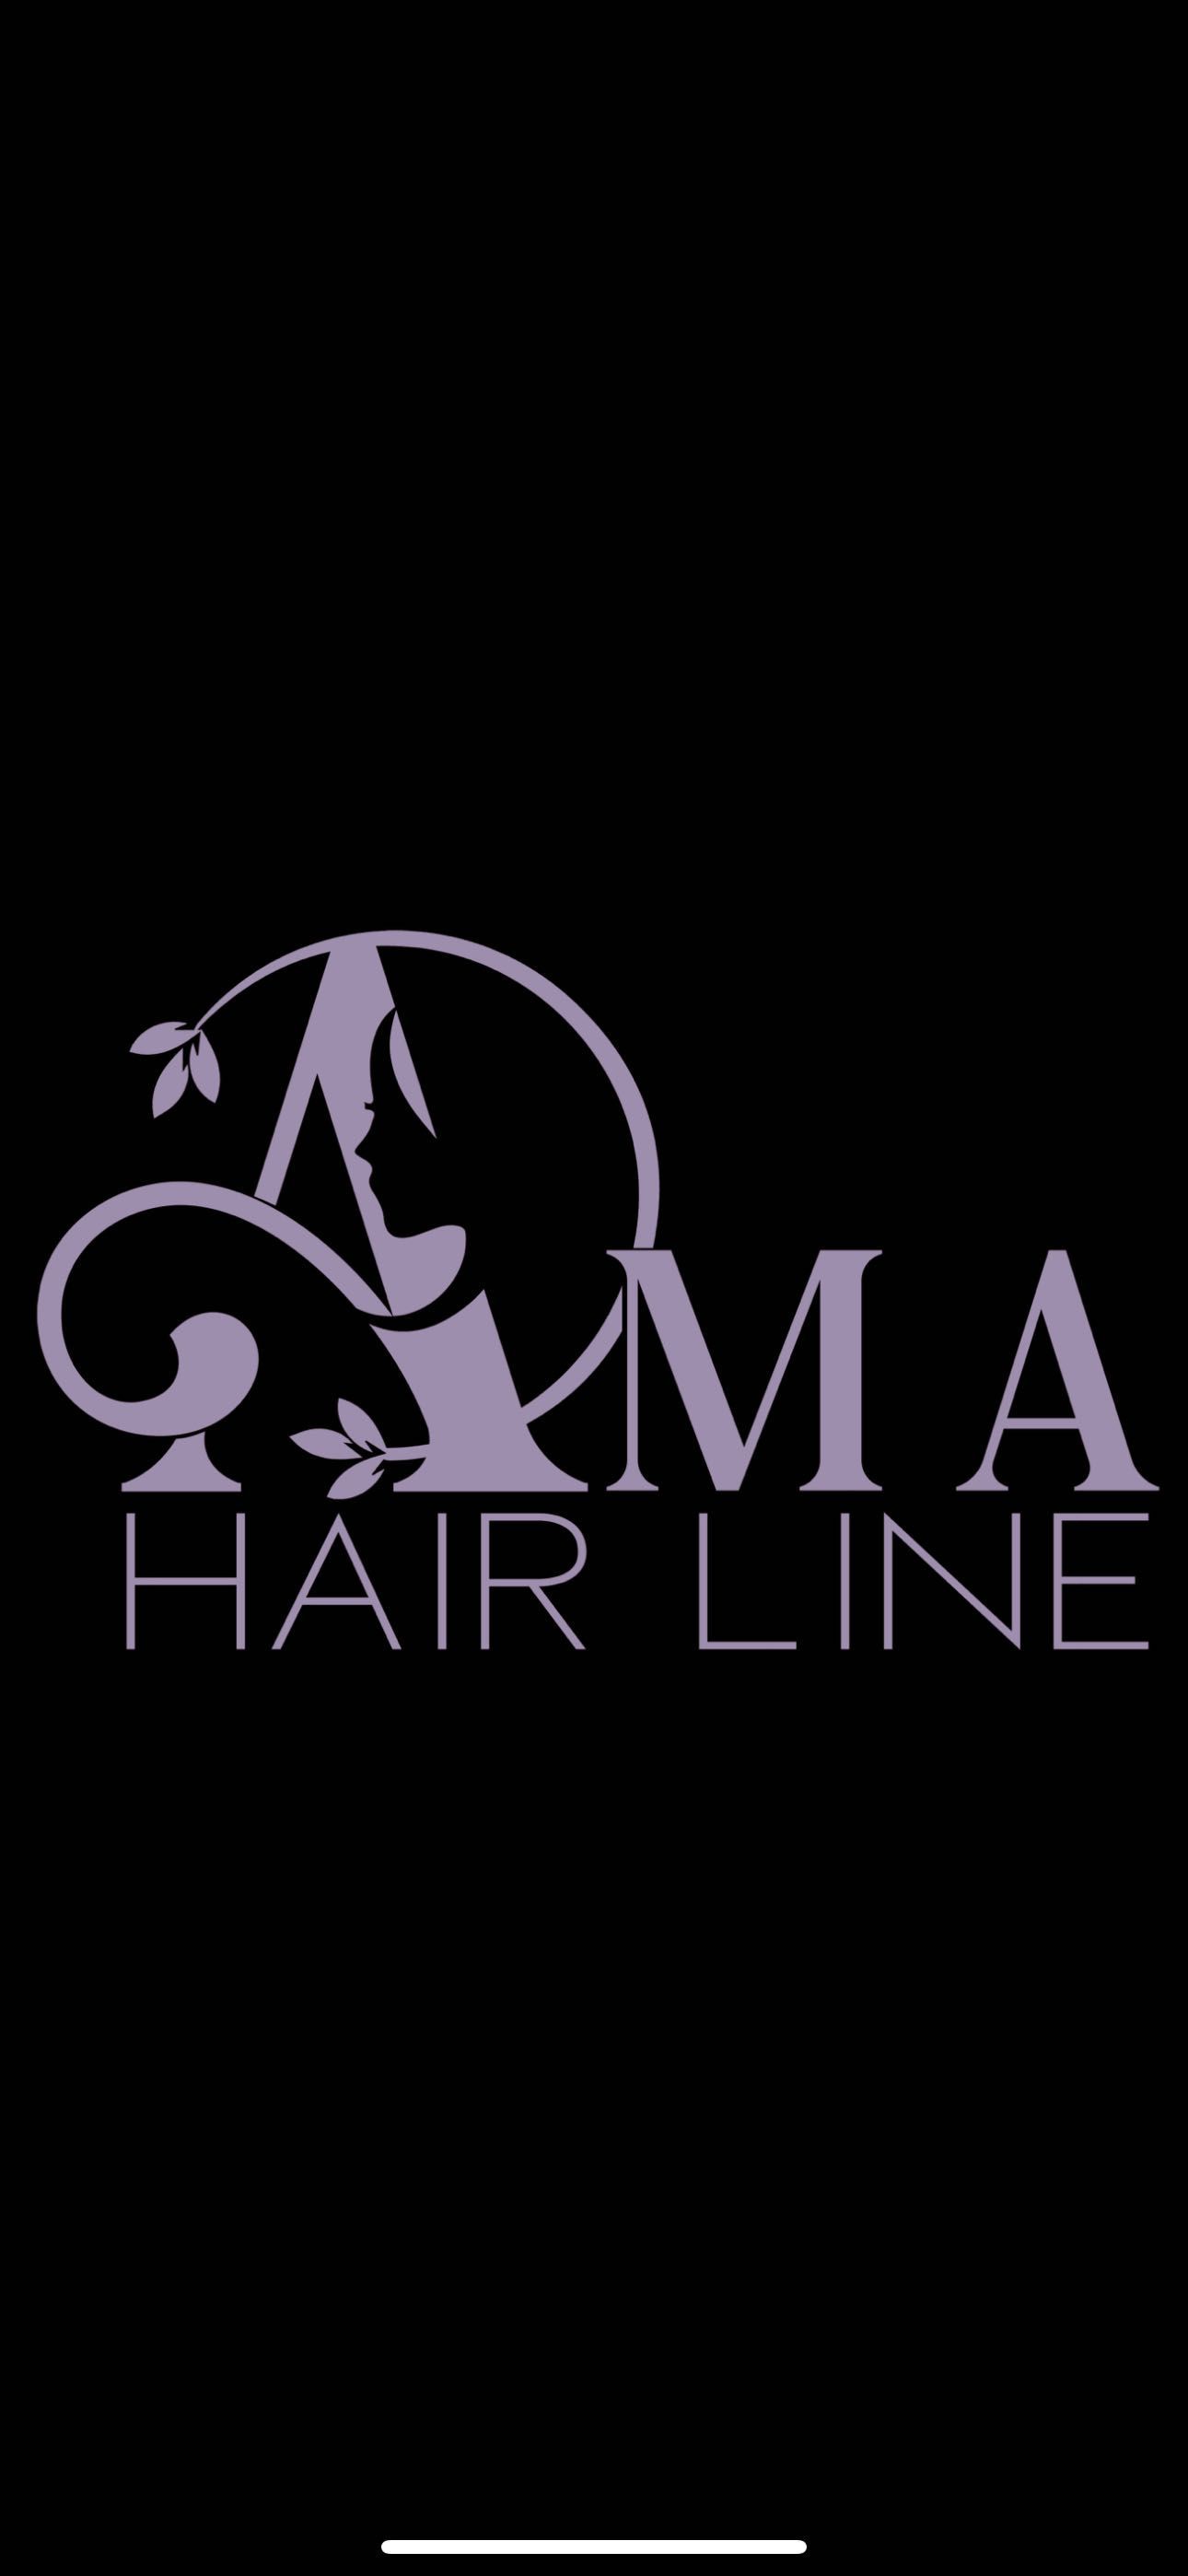 Ama hair line, 12451 South Orange blossom trail,, #119, #14, Orlando, 32837